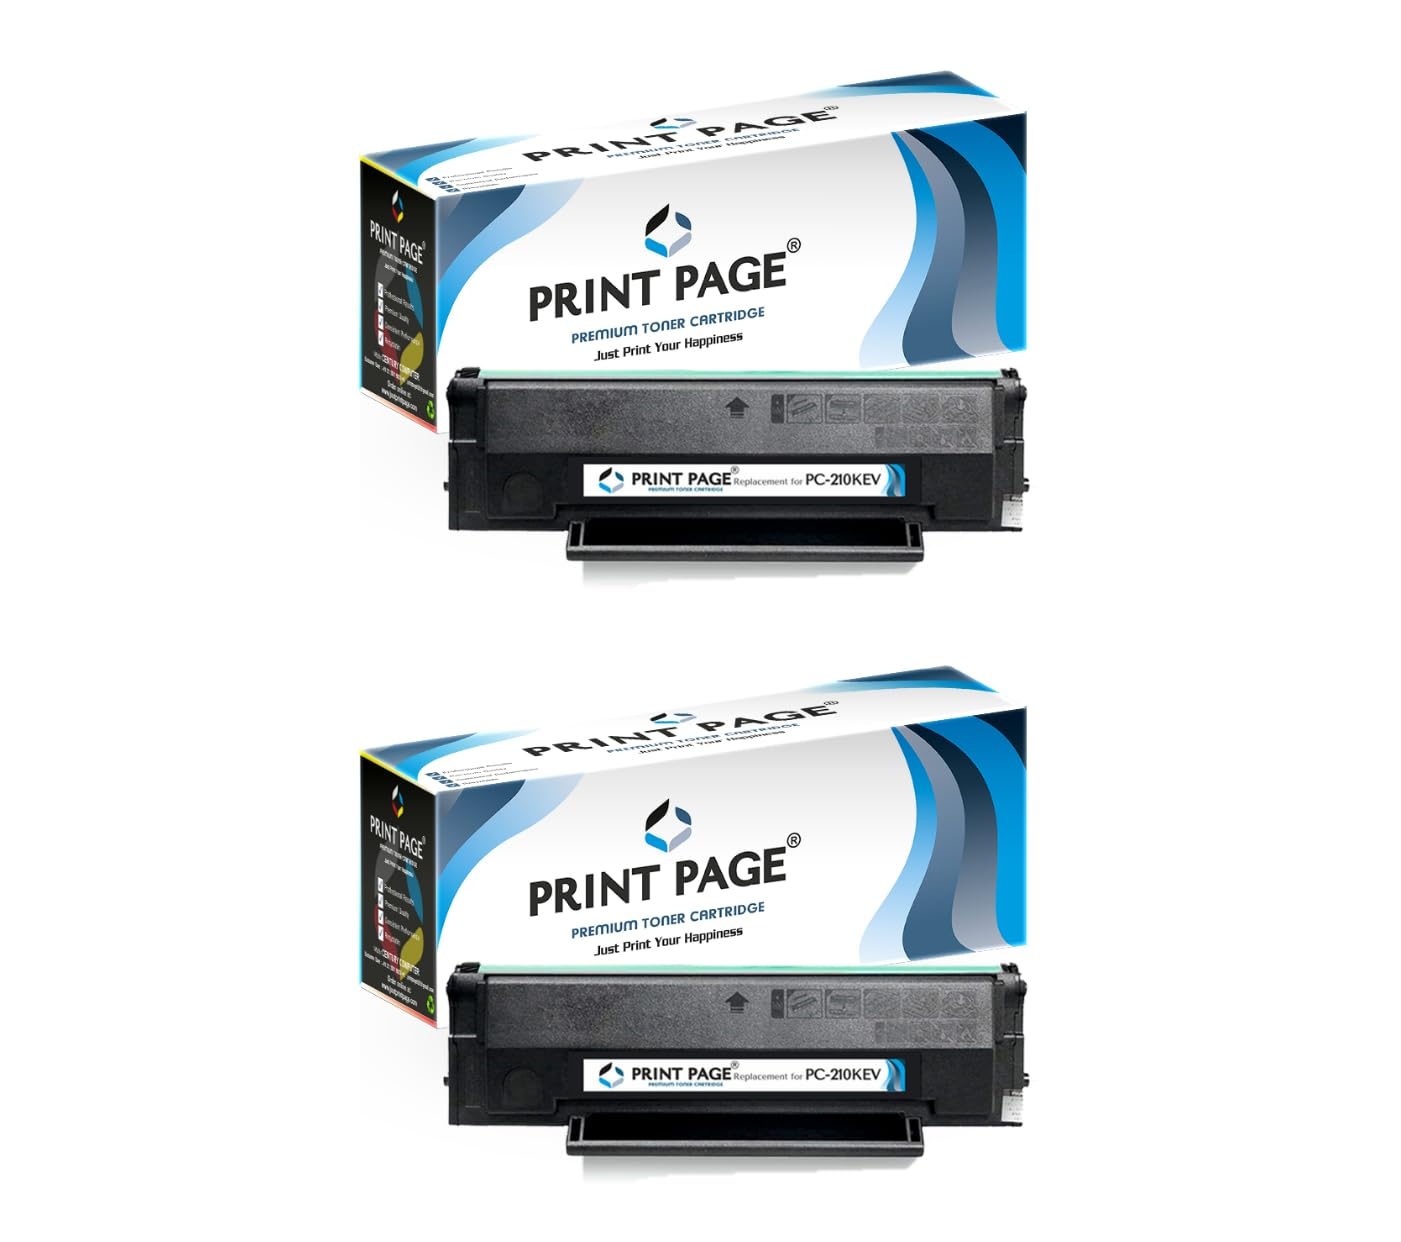 Print Page PC-210KEV Toner Cartridge for Pantum Printer P2200, P2500, P2500W, M6500, M6500N, M6500W, M6500NW, M6550, M6550N, M6550W (Set of 2)